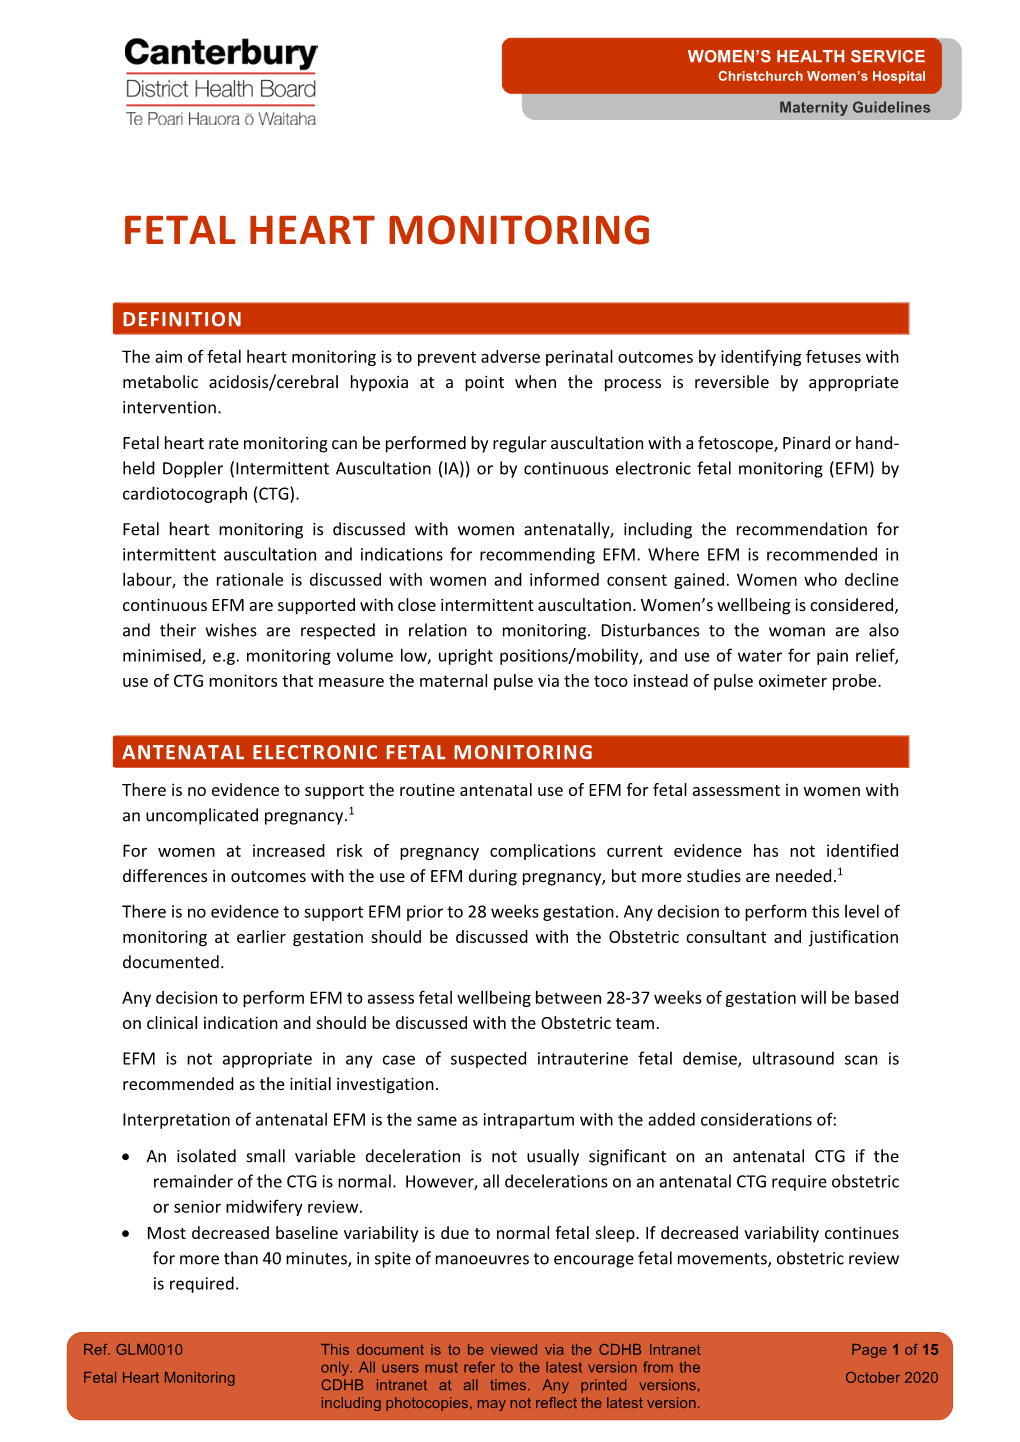 Fetal Heart Monitoring